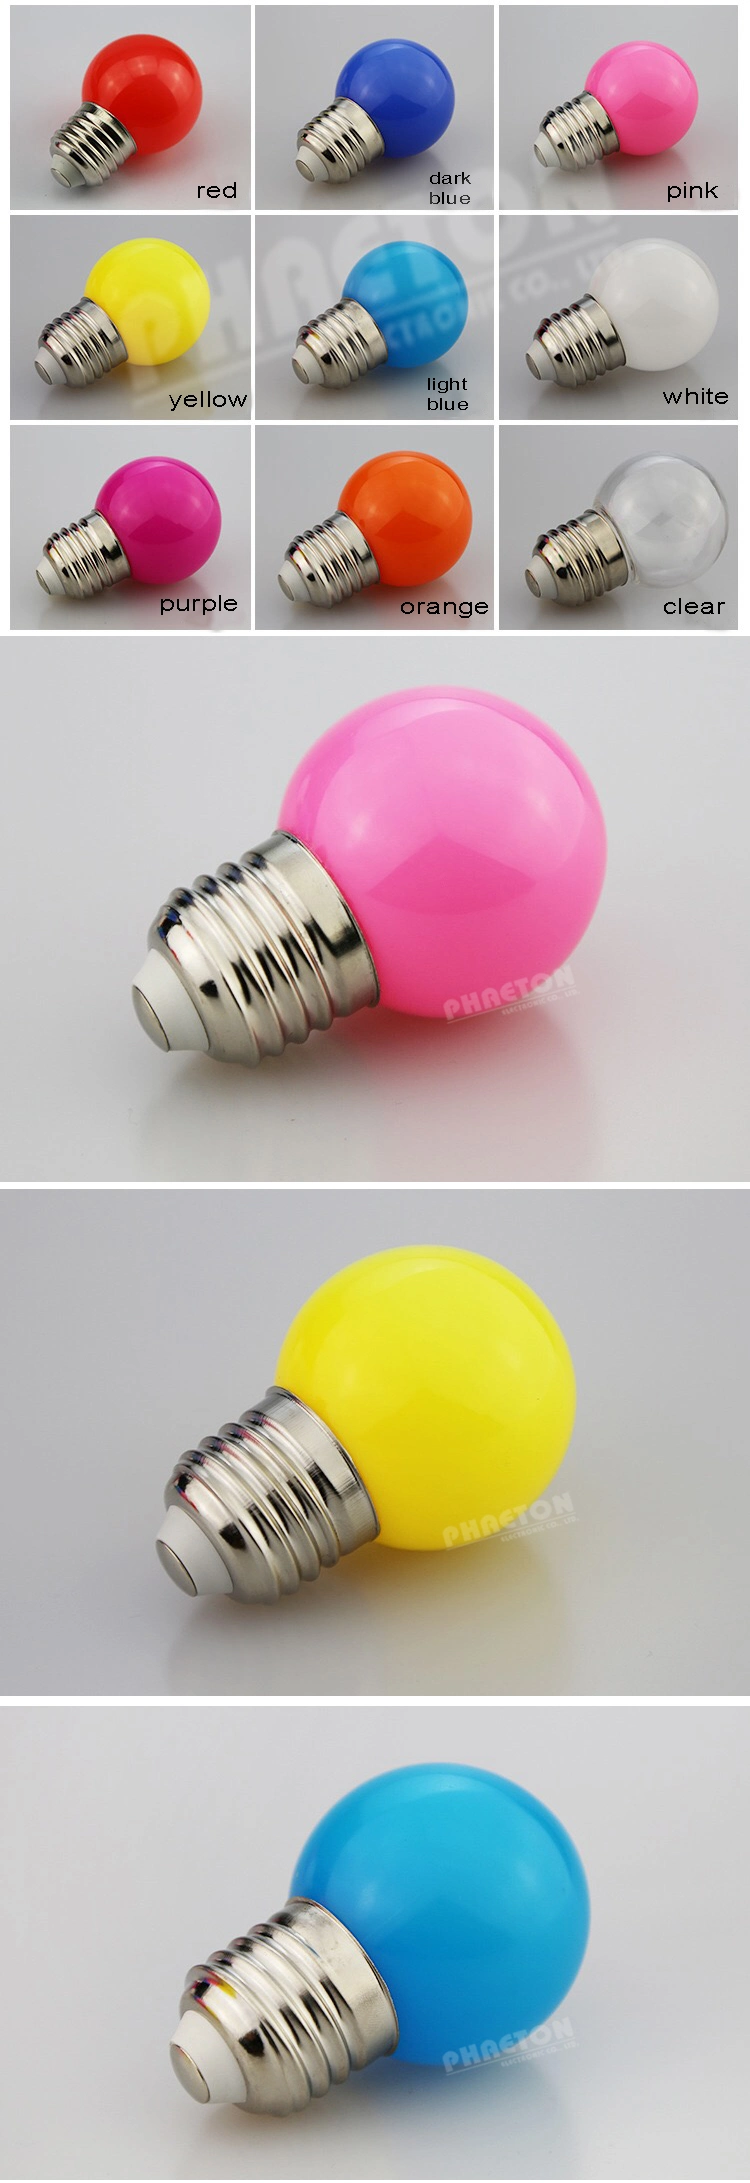 Colorful 1W 2W 3W G45 LED Bulb, Holiday Christmas Light